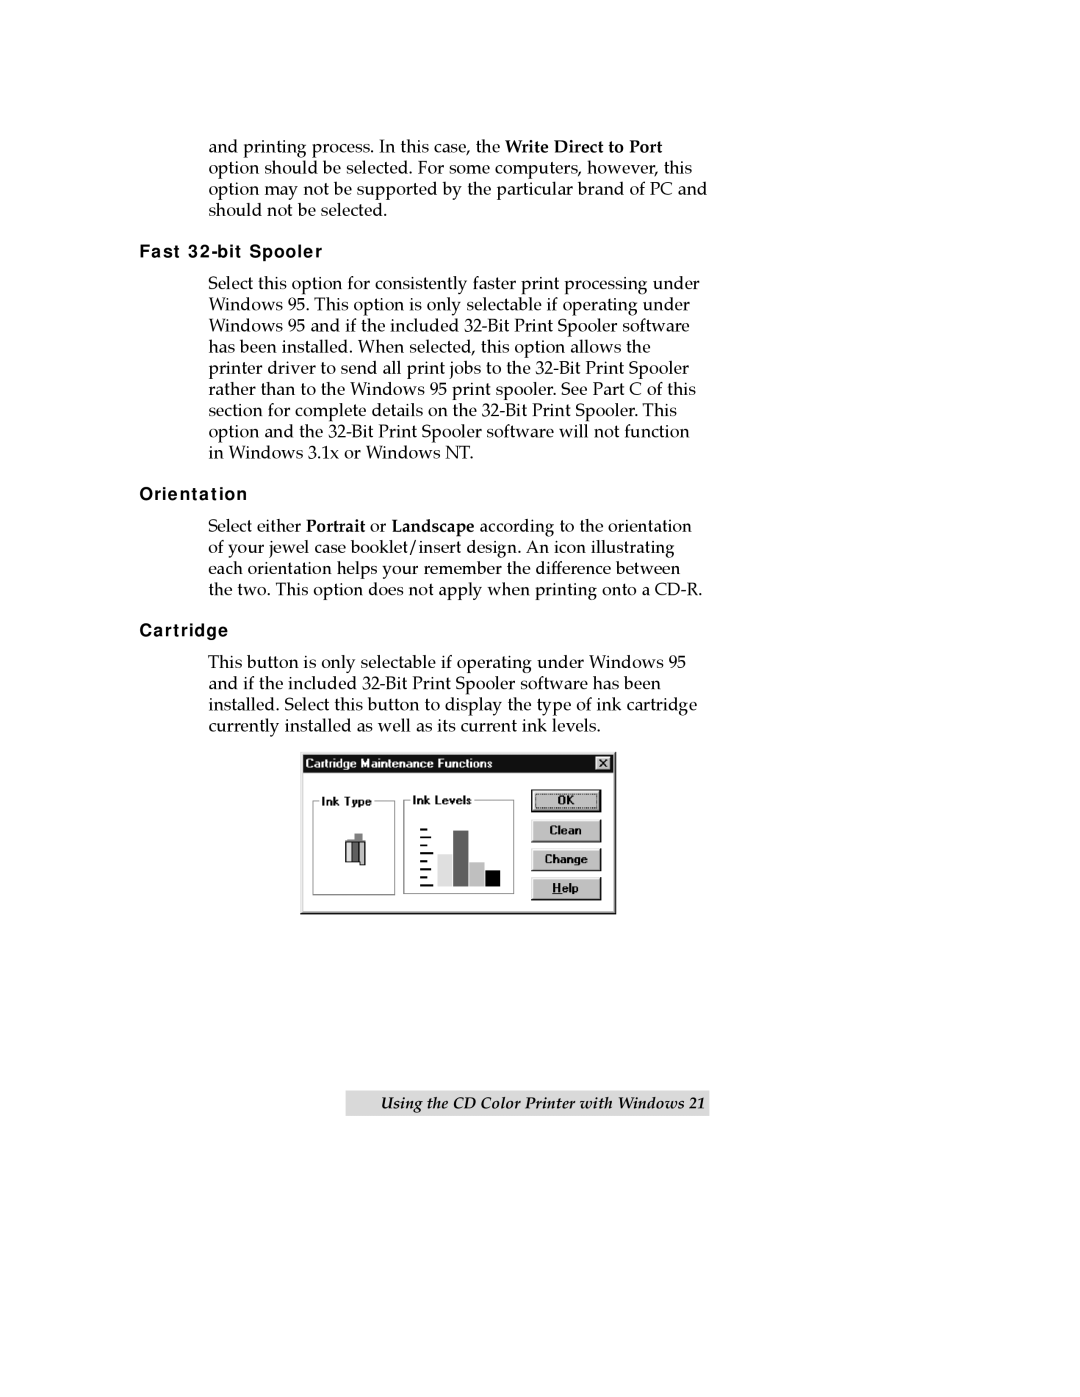 FARGO electronic CD Color Printer manual Fast 32-bitSpooler, Orientation, Cartridge 